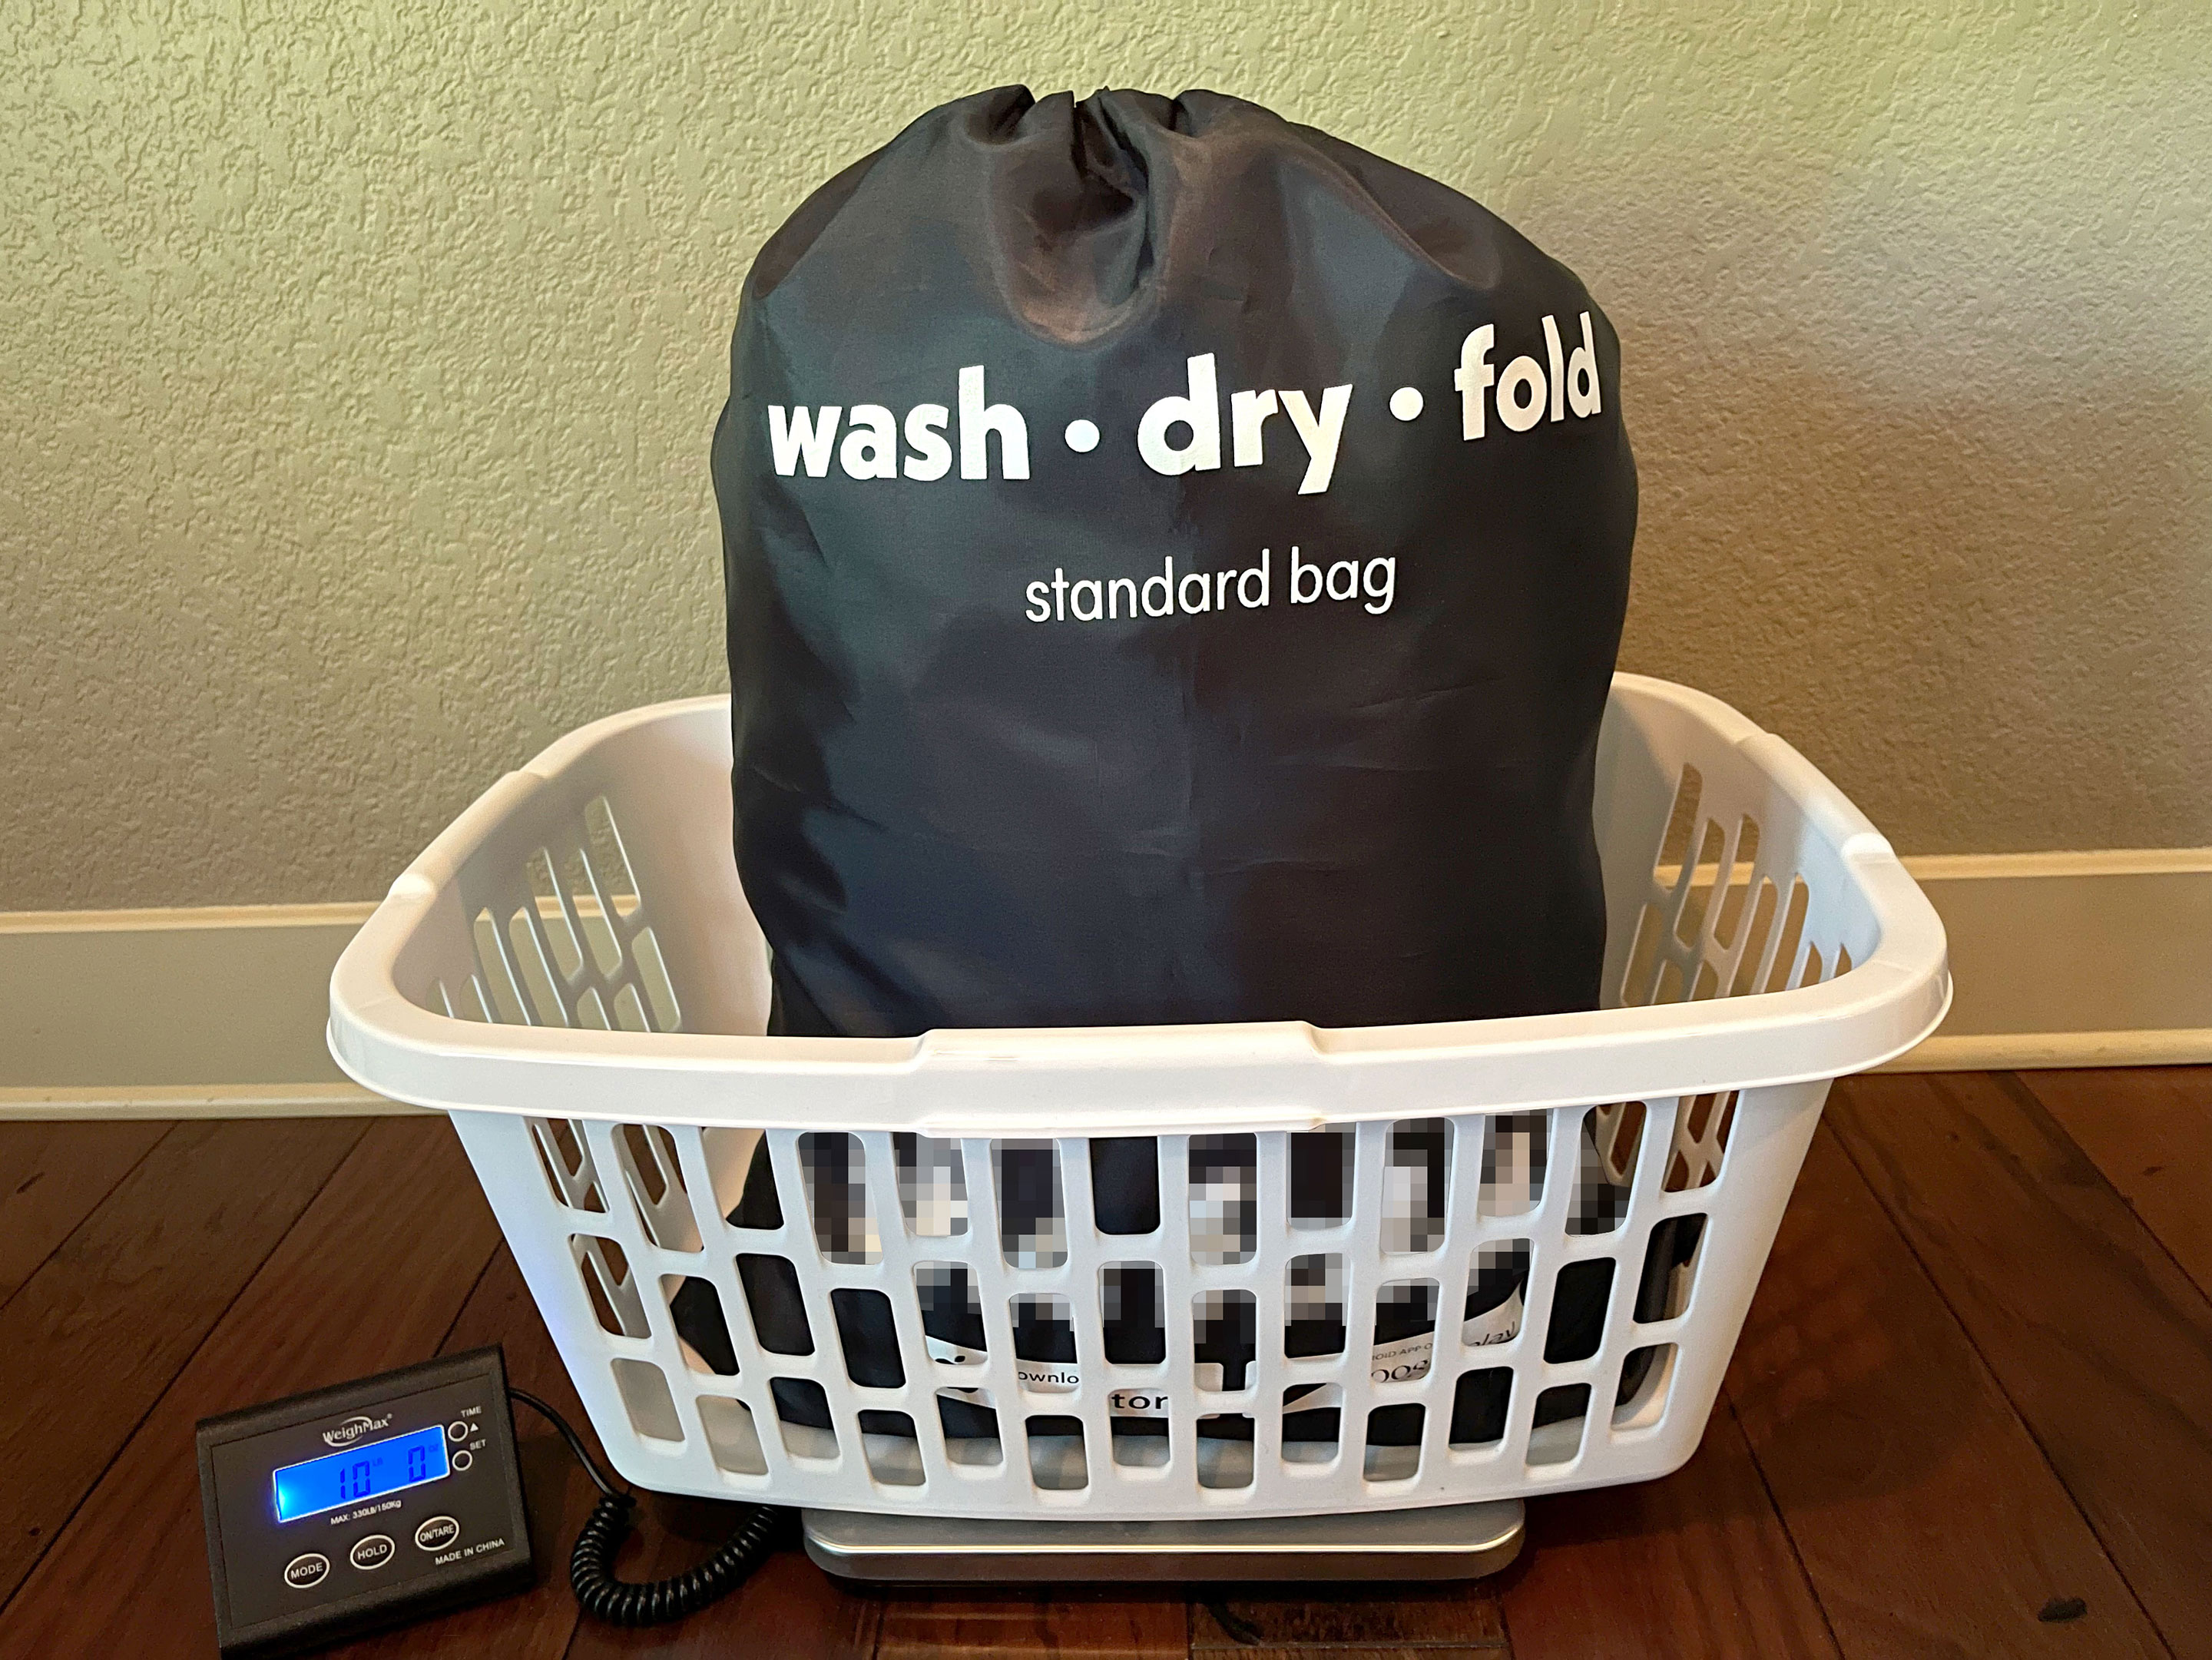 Bag Laundry vs Per Pound Laundry